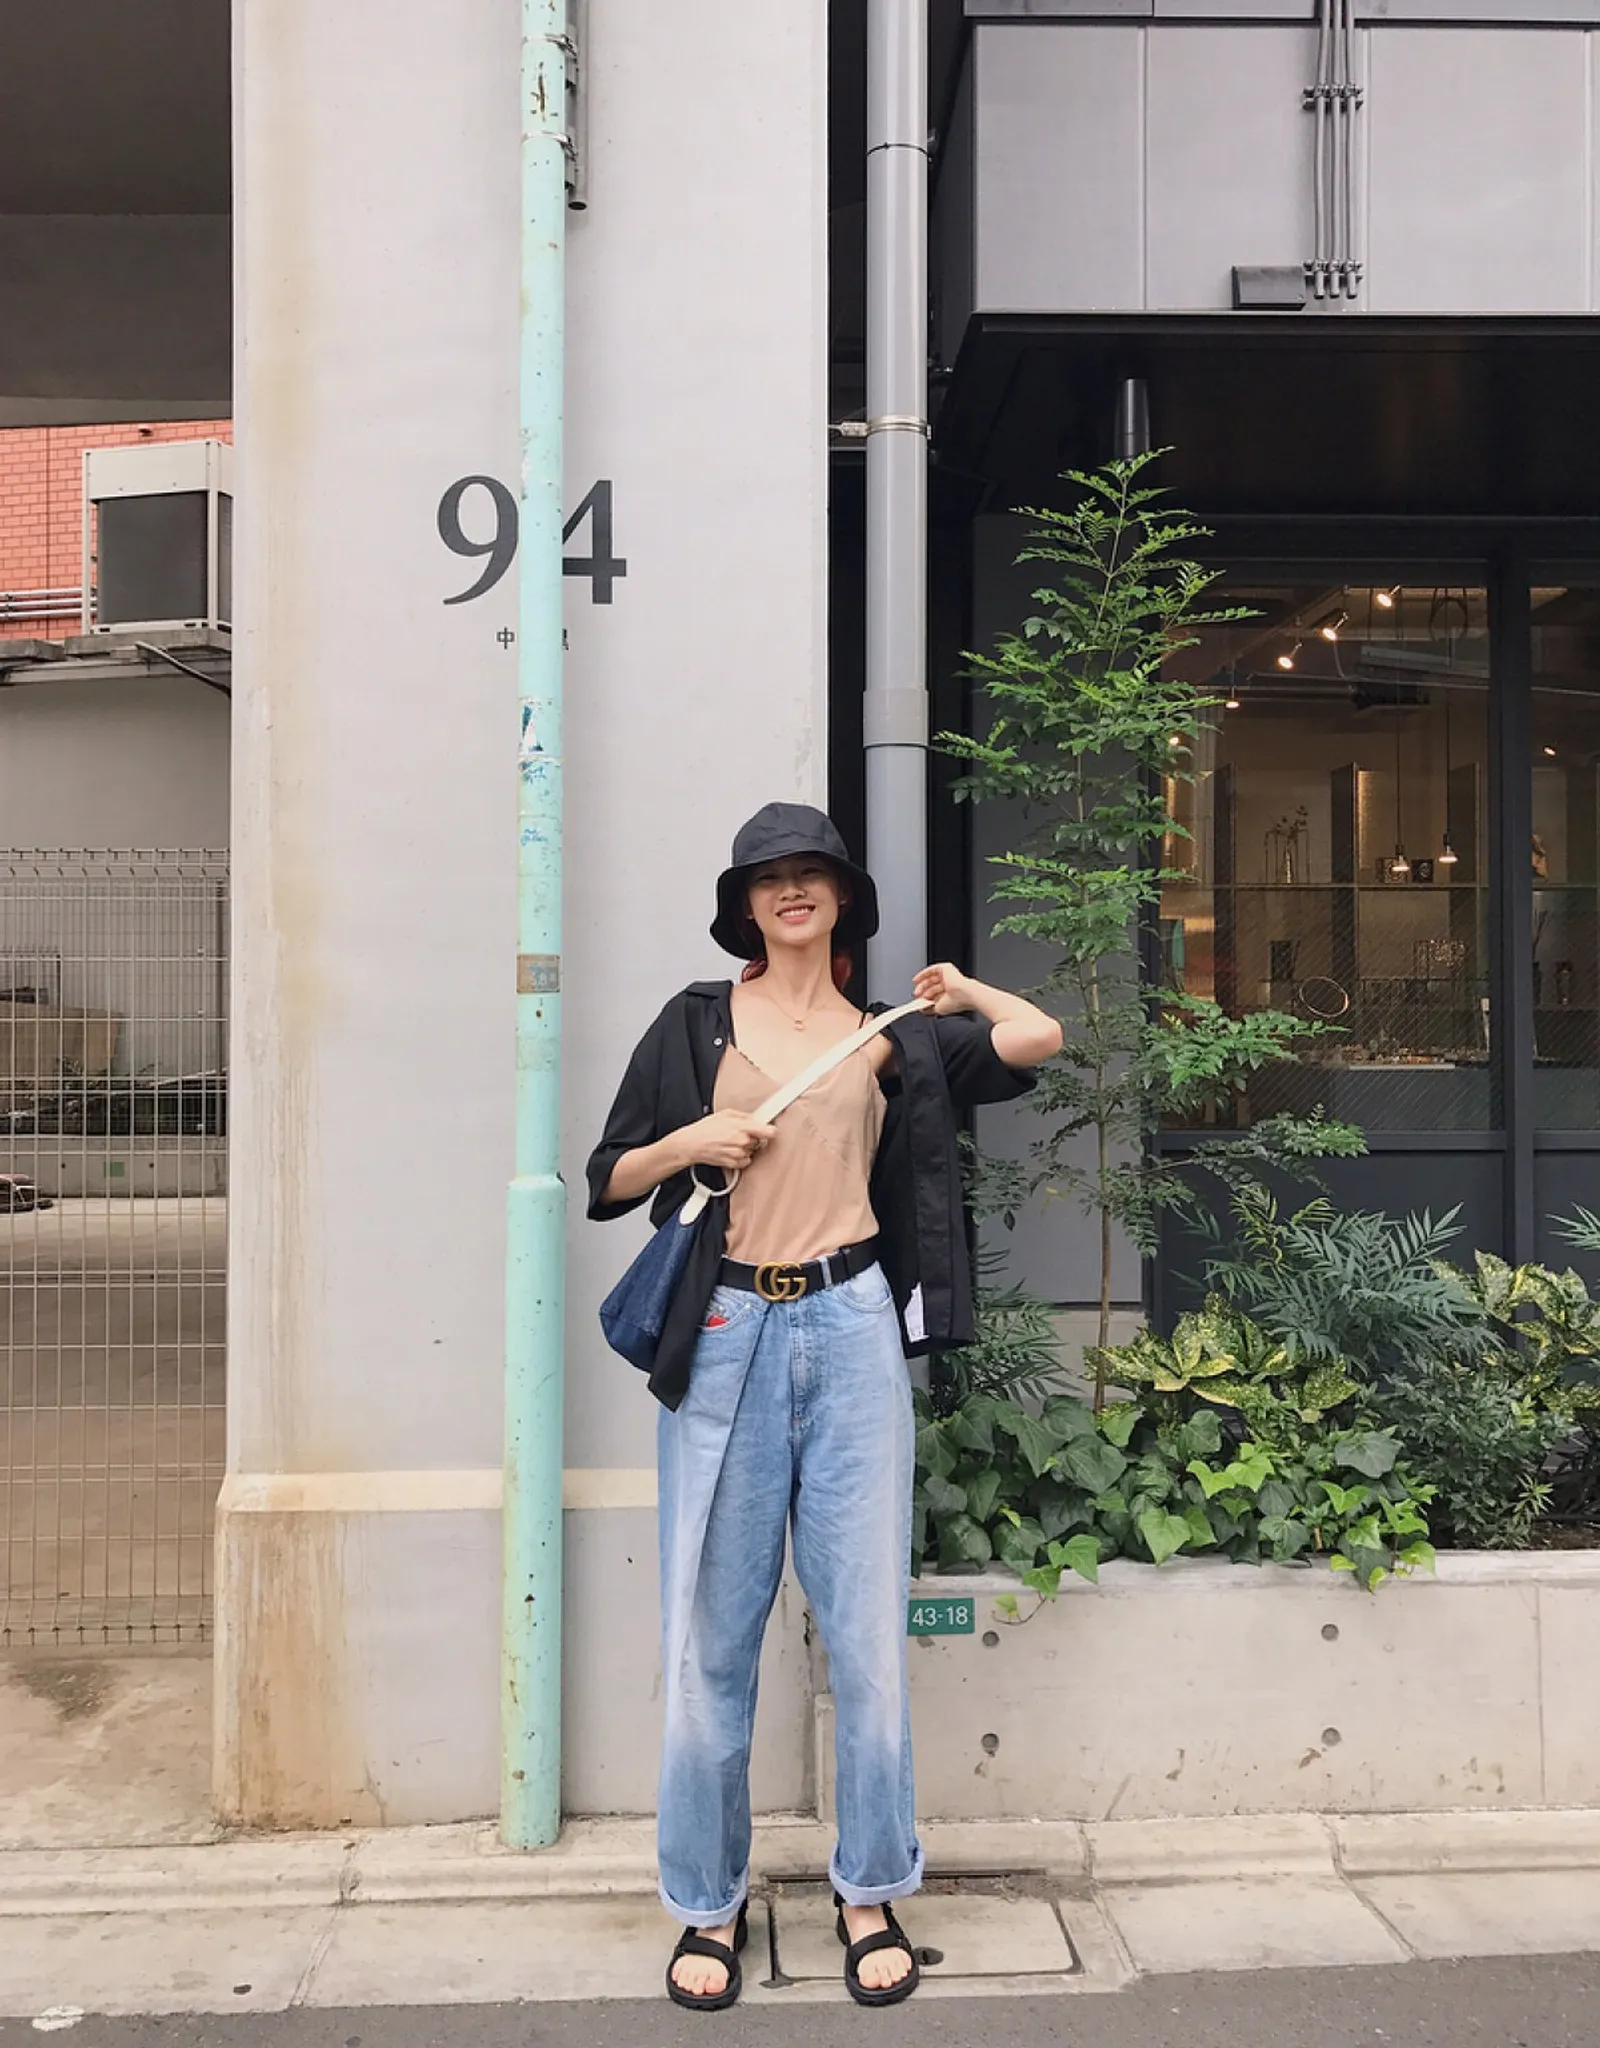 Ide Mix & Match OOTD Pakai Jeans a La Jung Ho Yeon